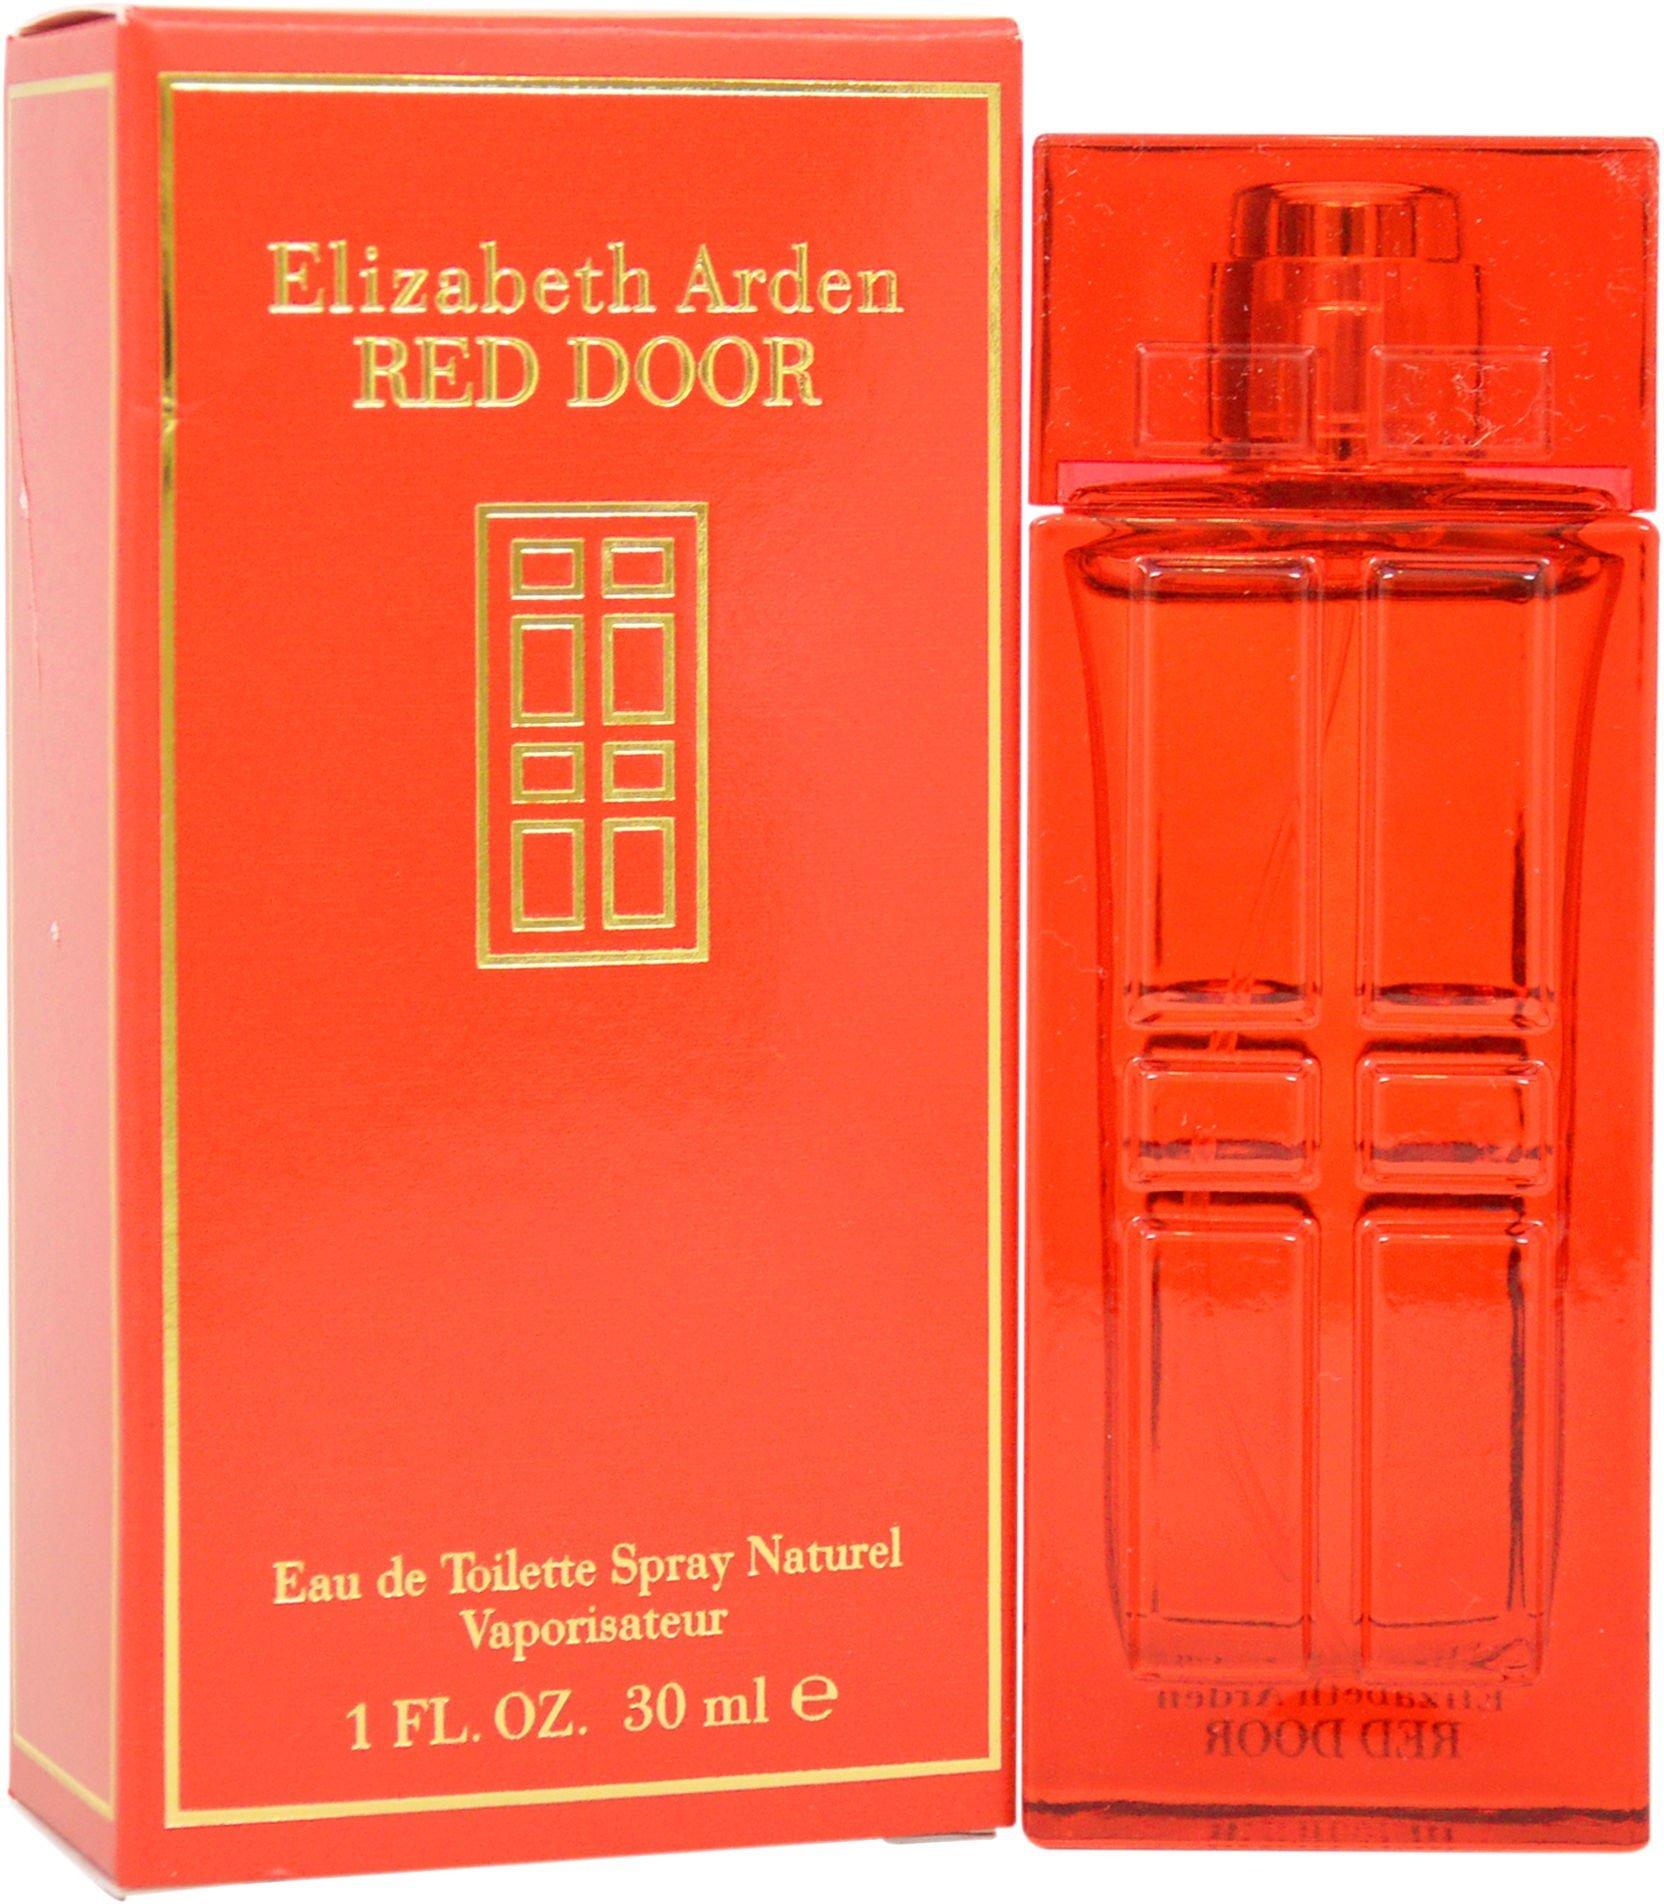 Red Door Eau De Toilette Spray Fragrance